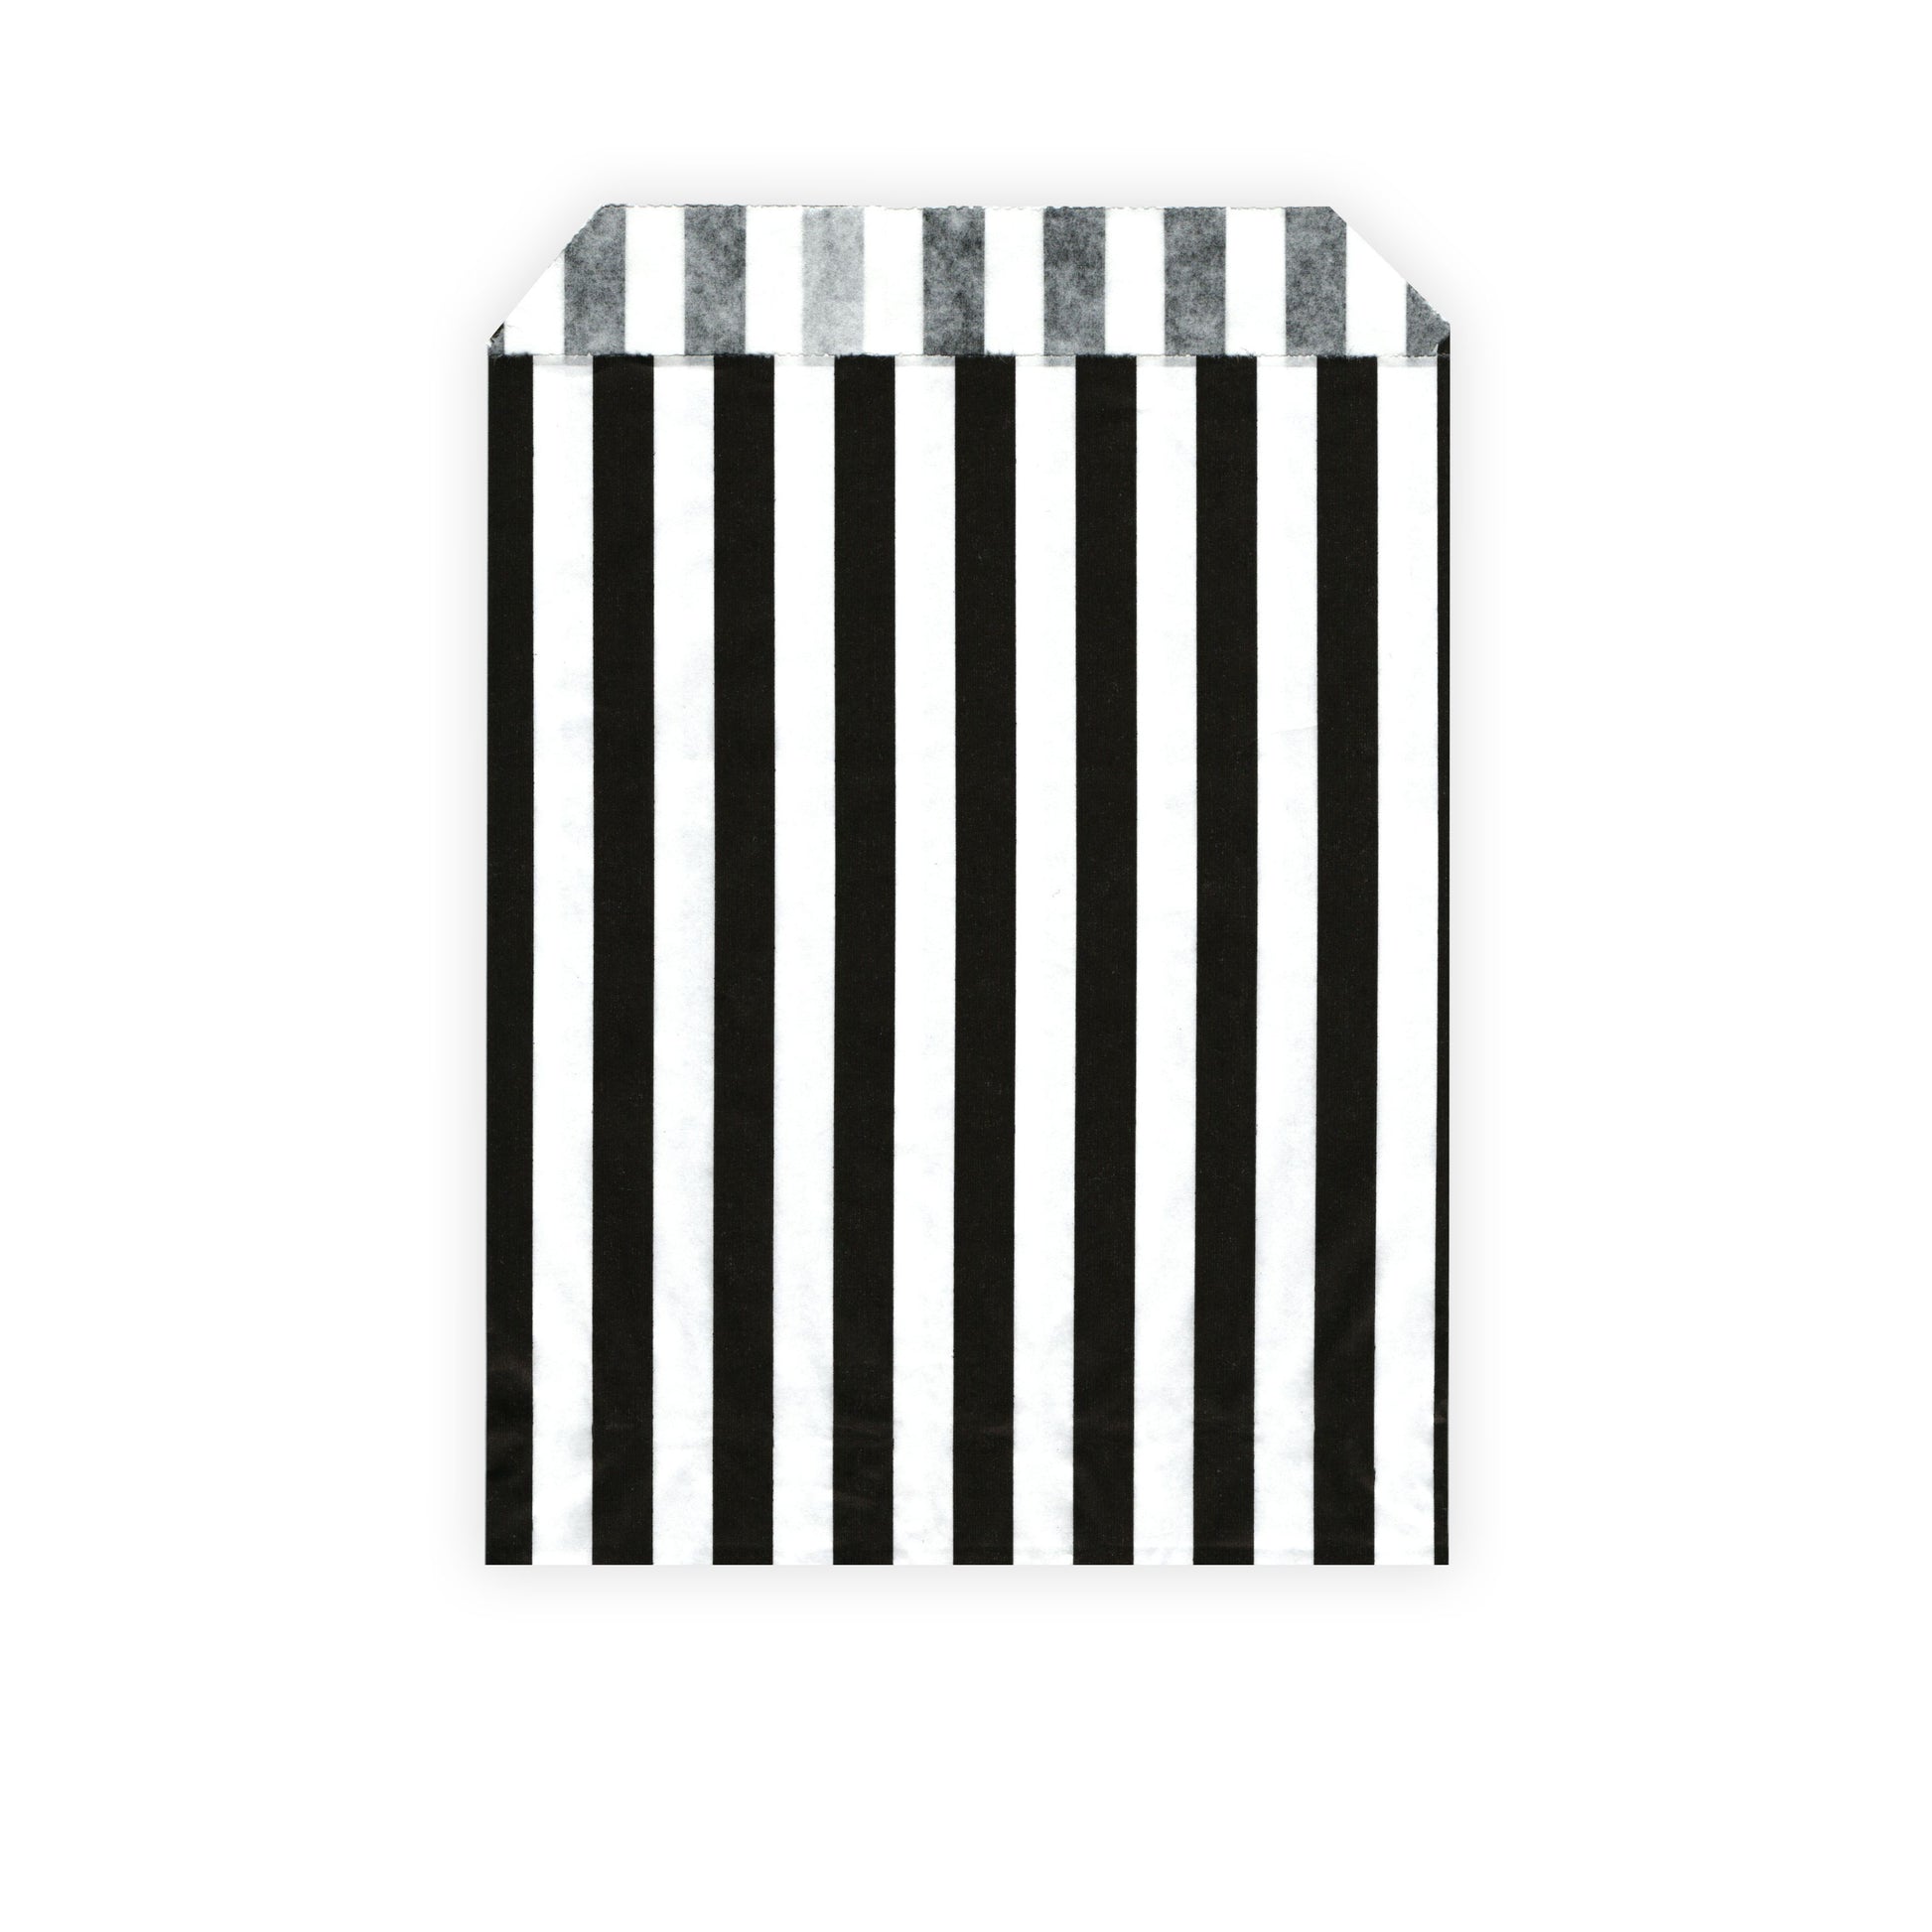 Retro Candy Bags - Black / White Stripes - 13 x 18cm by Gobrecht & Ulrich